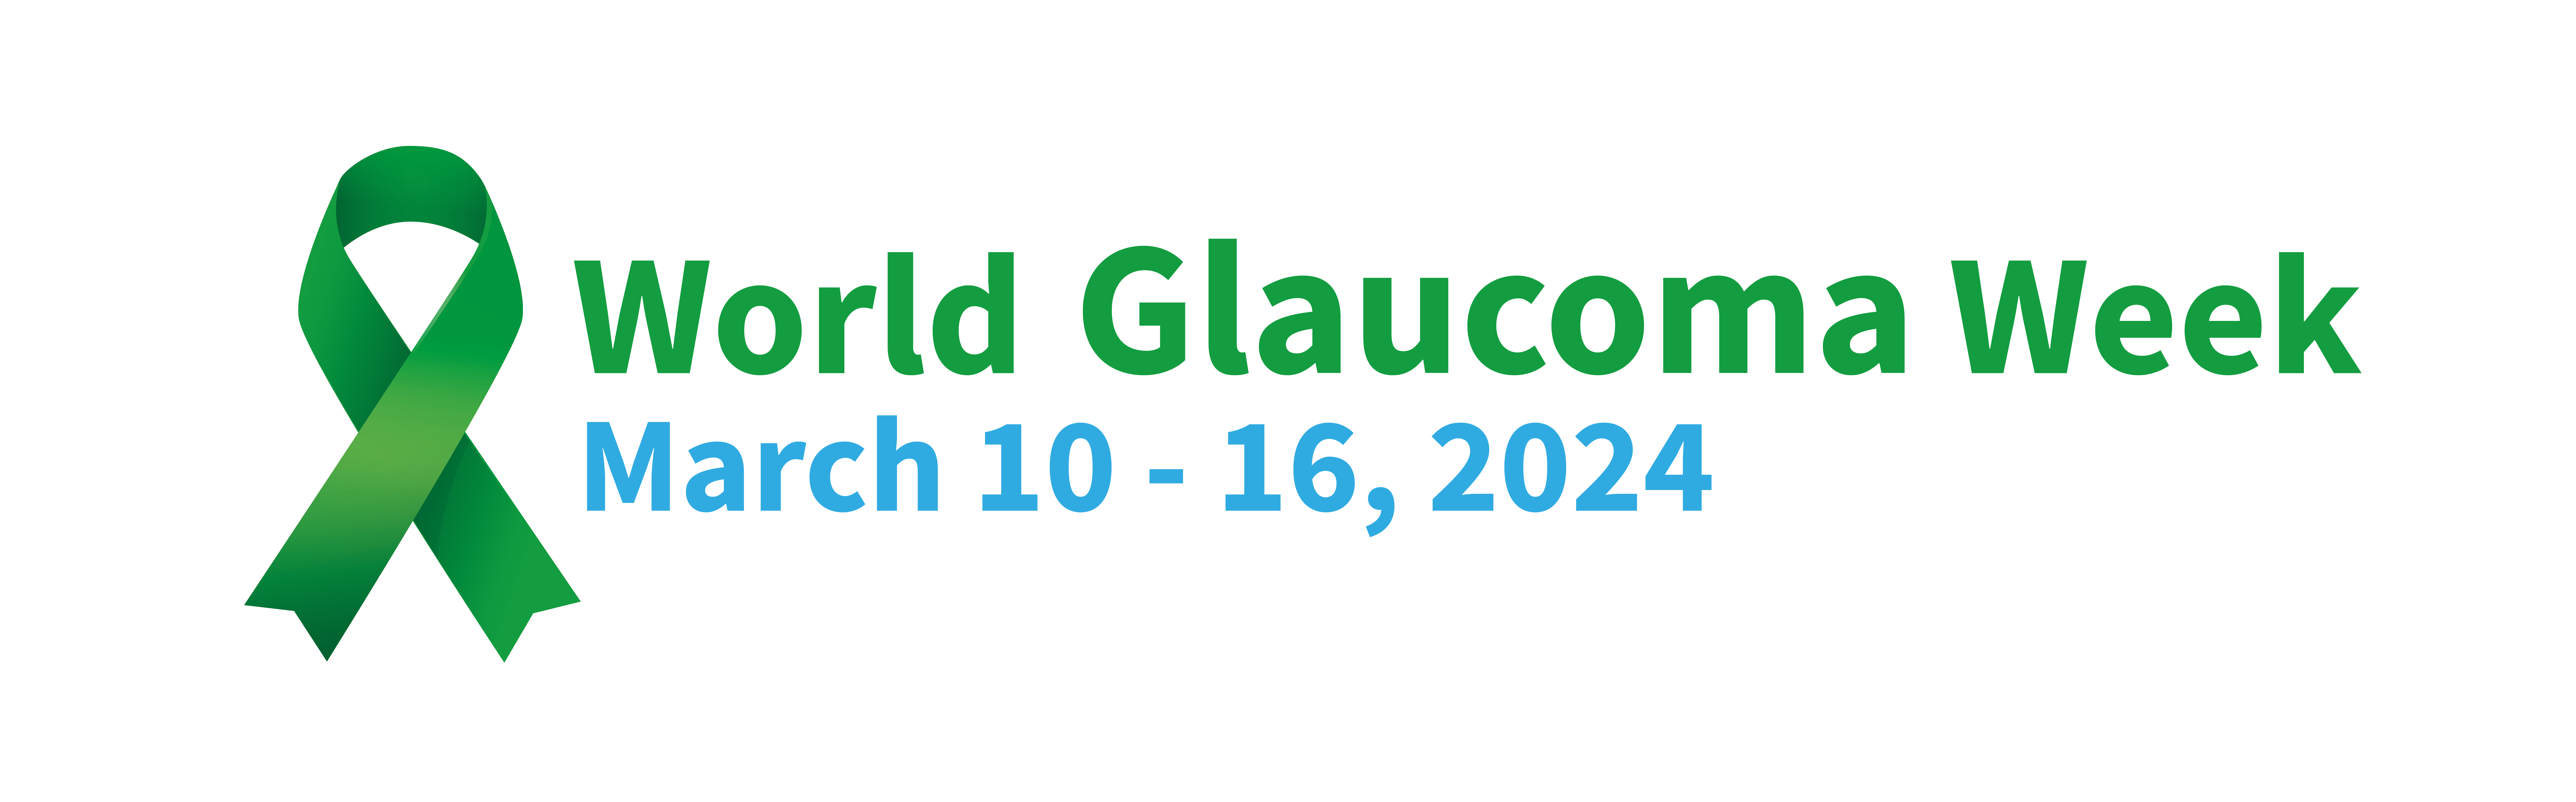 world glaucoma week march 10 - 16, 2024 banner